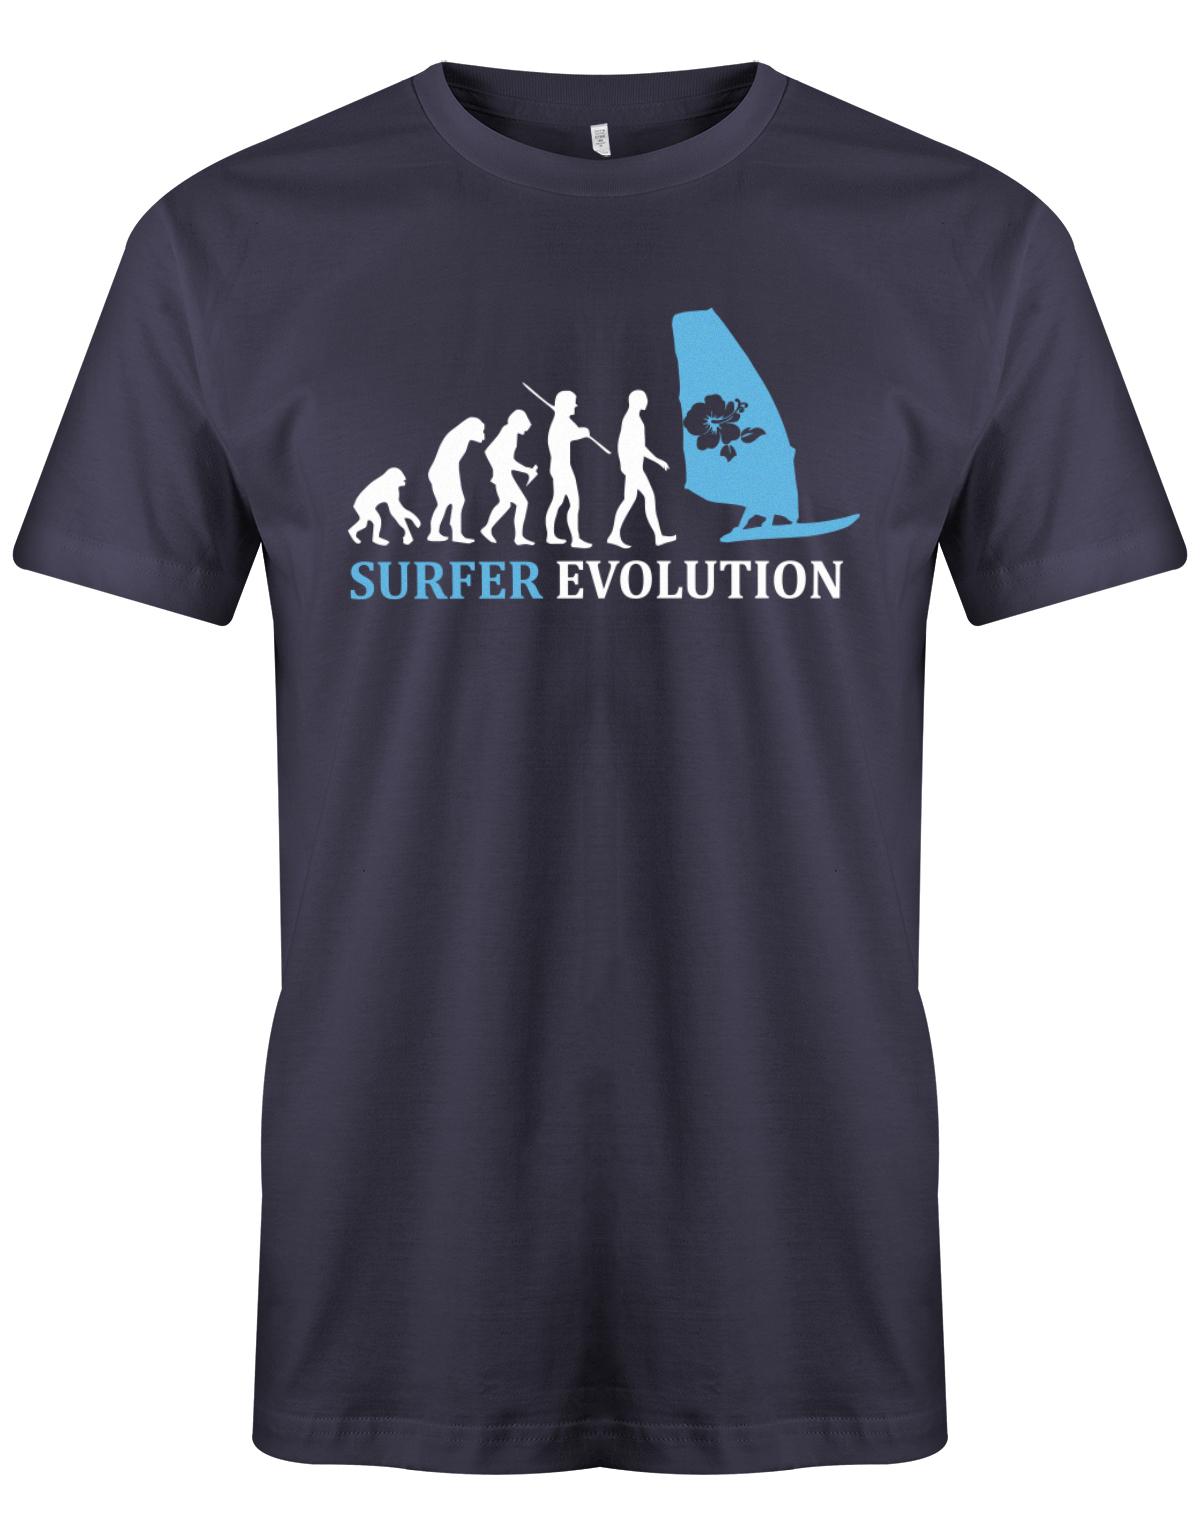 Surfer-Evolution-Surf-Herren-Shirt-Navy